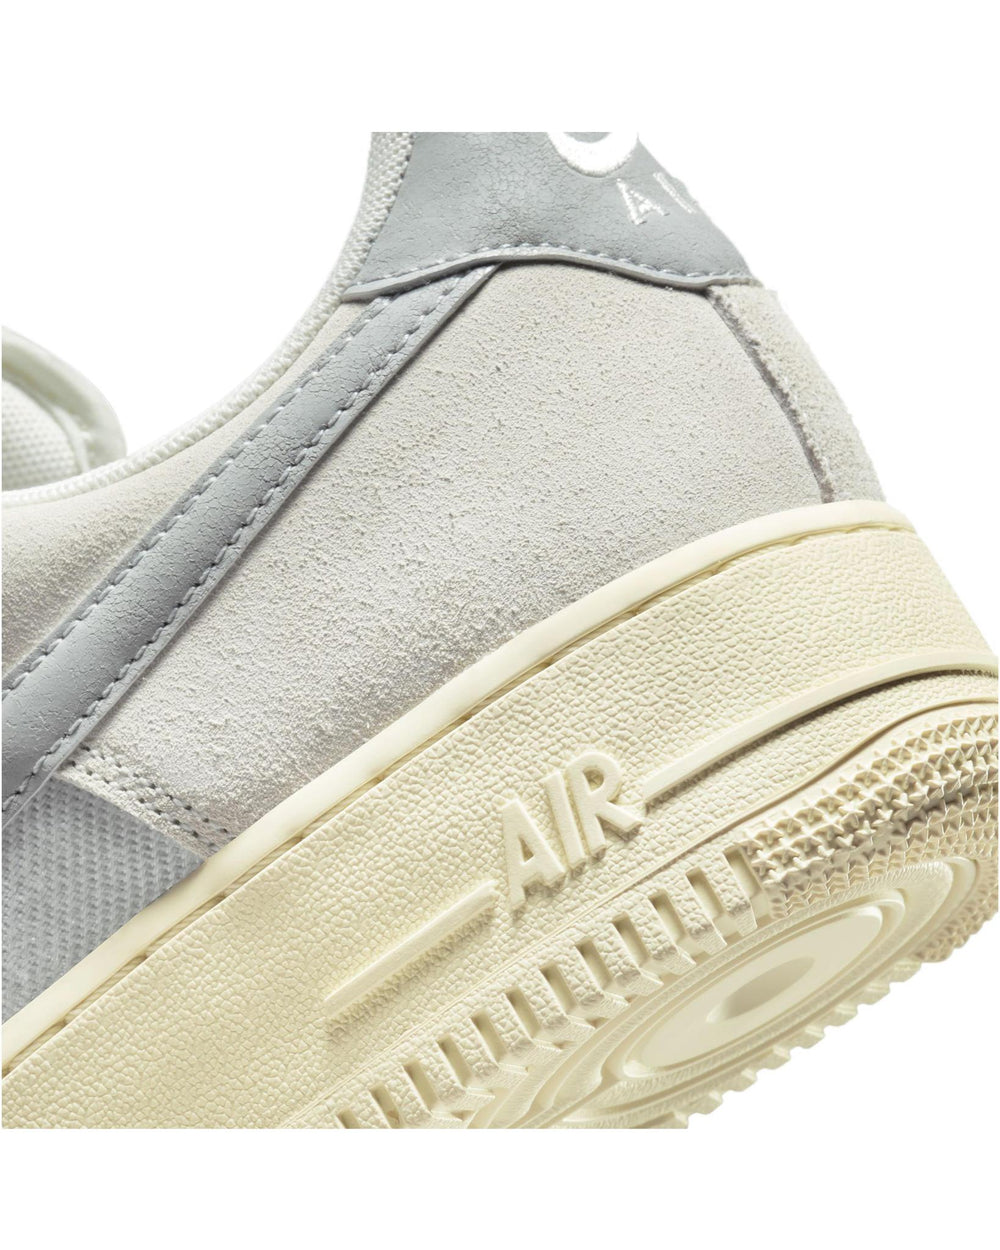 Nike Air Force 1 White, Sail & Platinum Tint